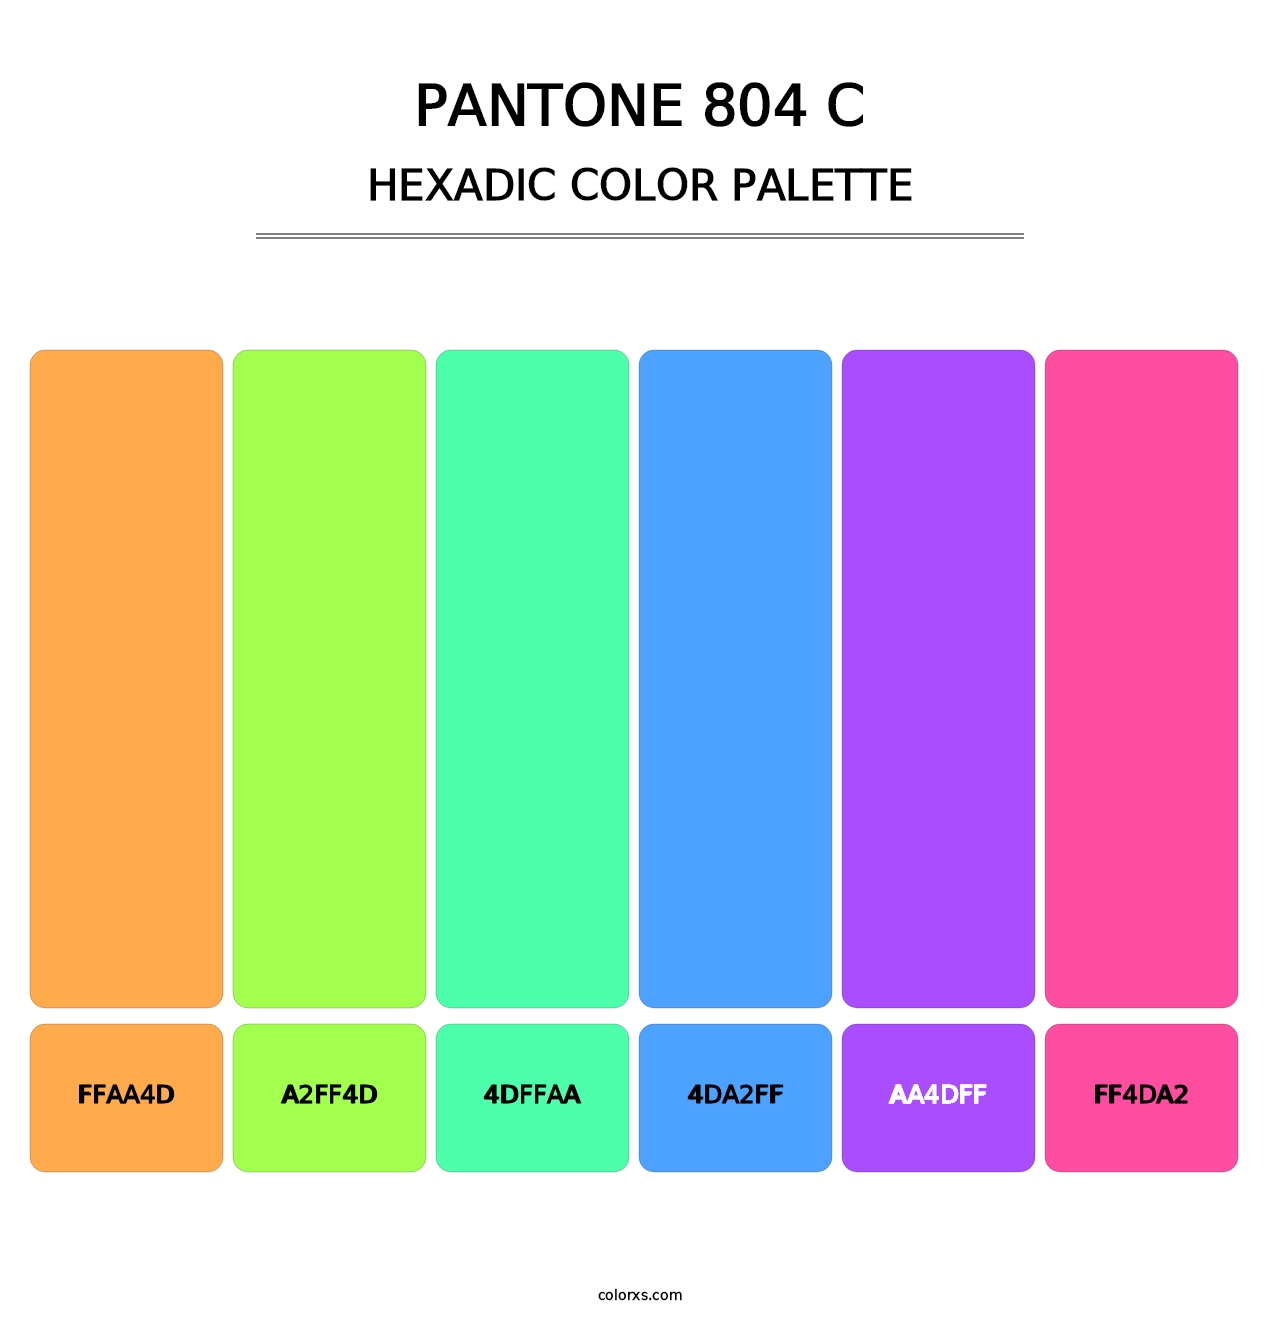 PANTONE 804 C - Hexadic Color Palette